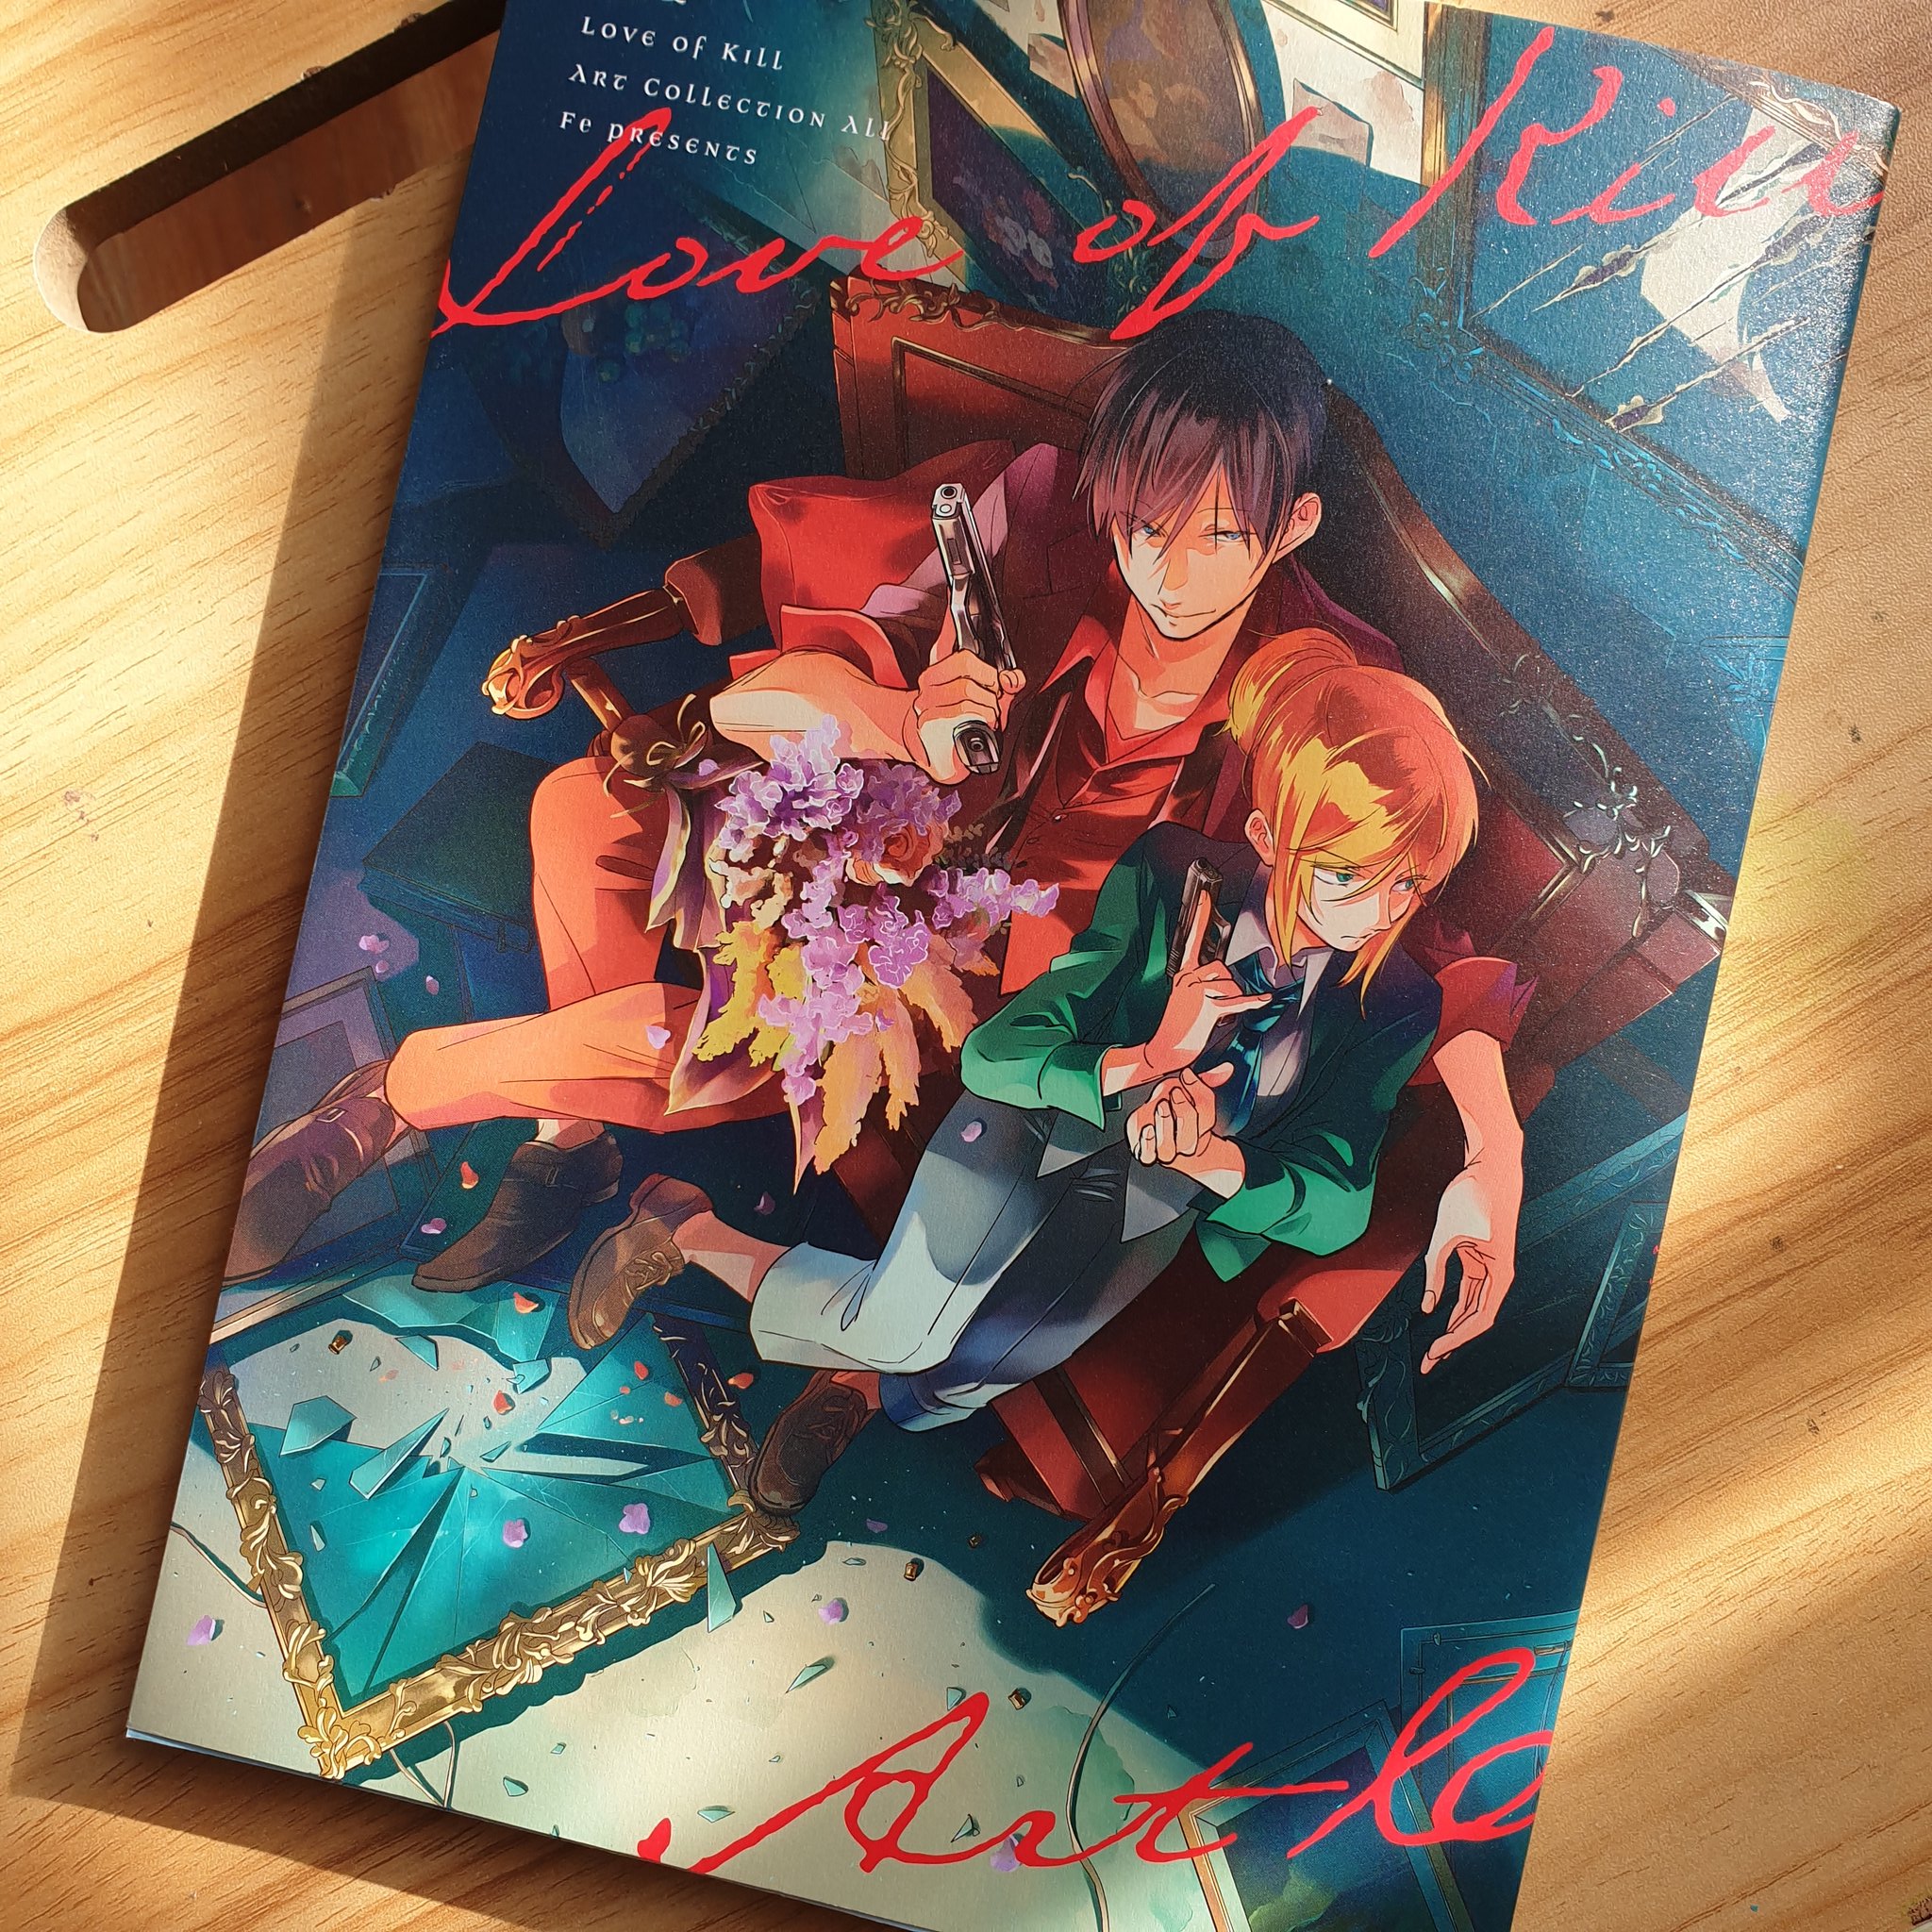 Love of Kill Koroshi Ai Art Collection All Anime Manga Artwork Book New FE  